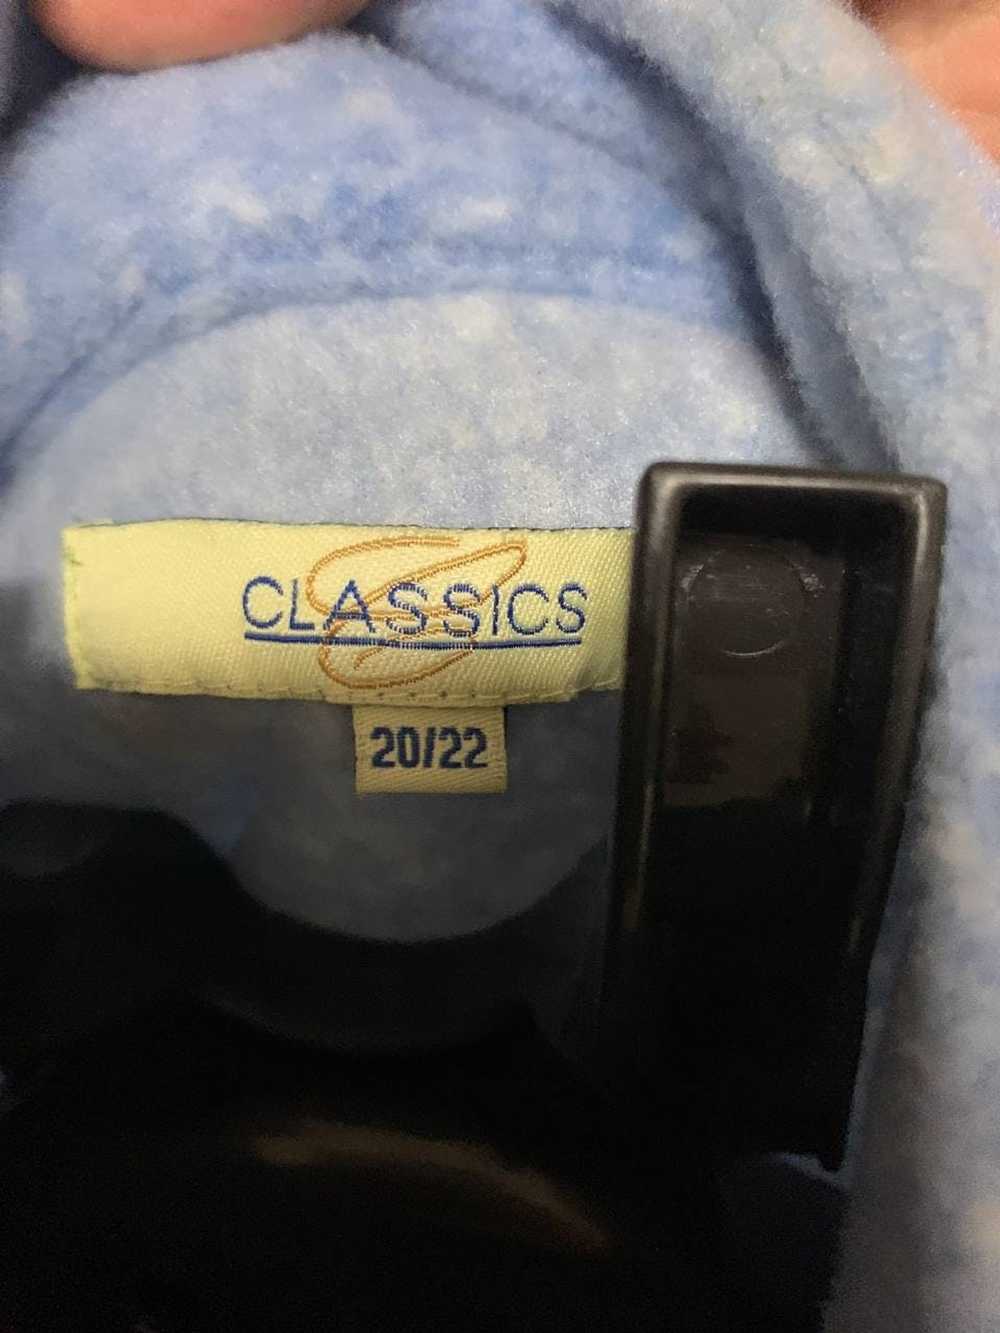 Classics Australia Vintage fleece - image 2